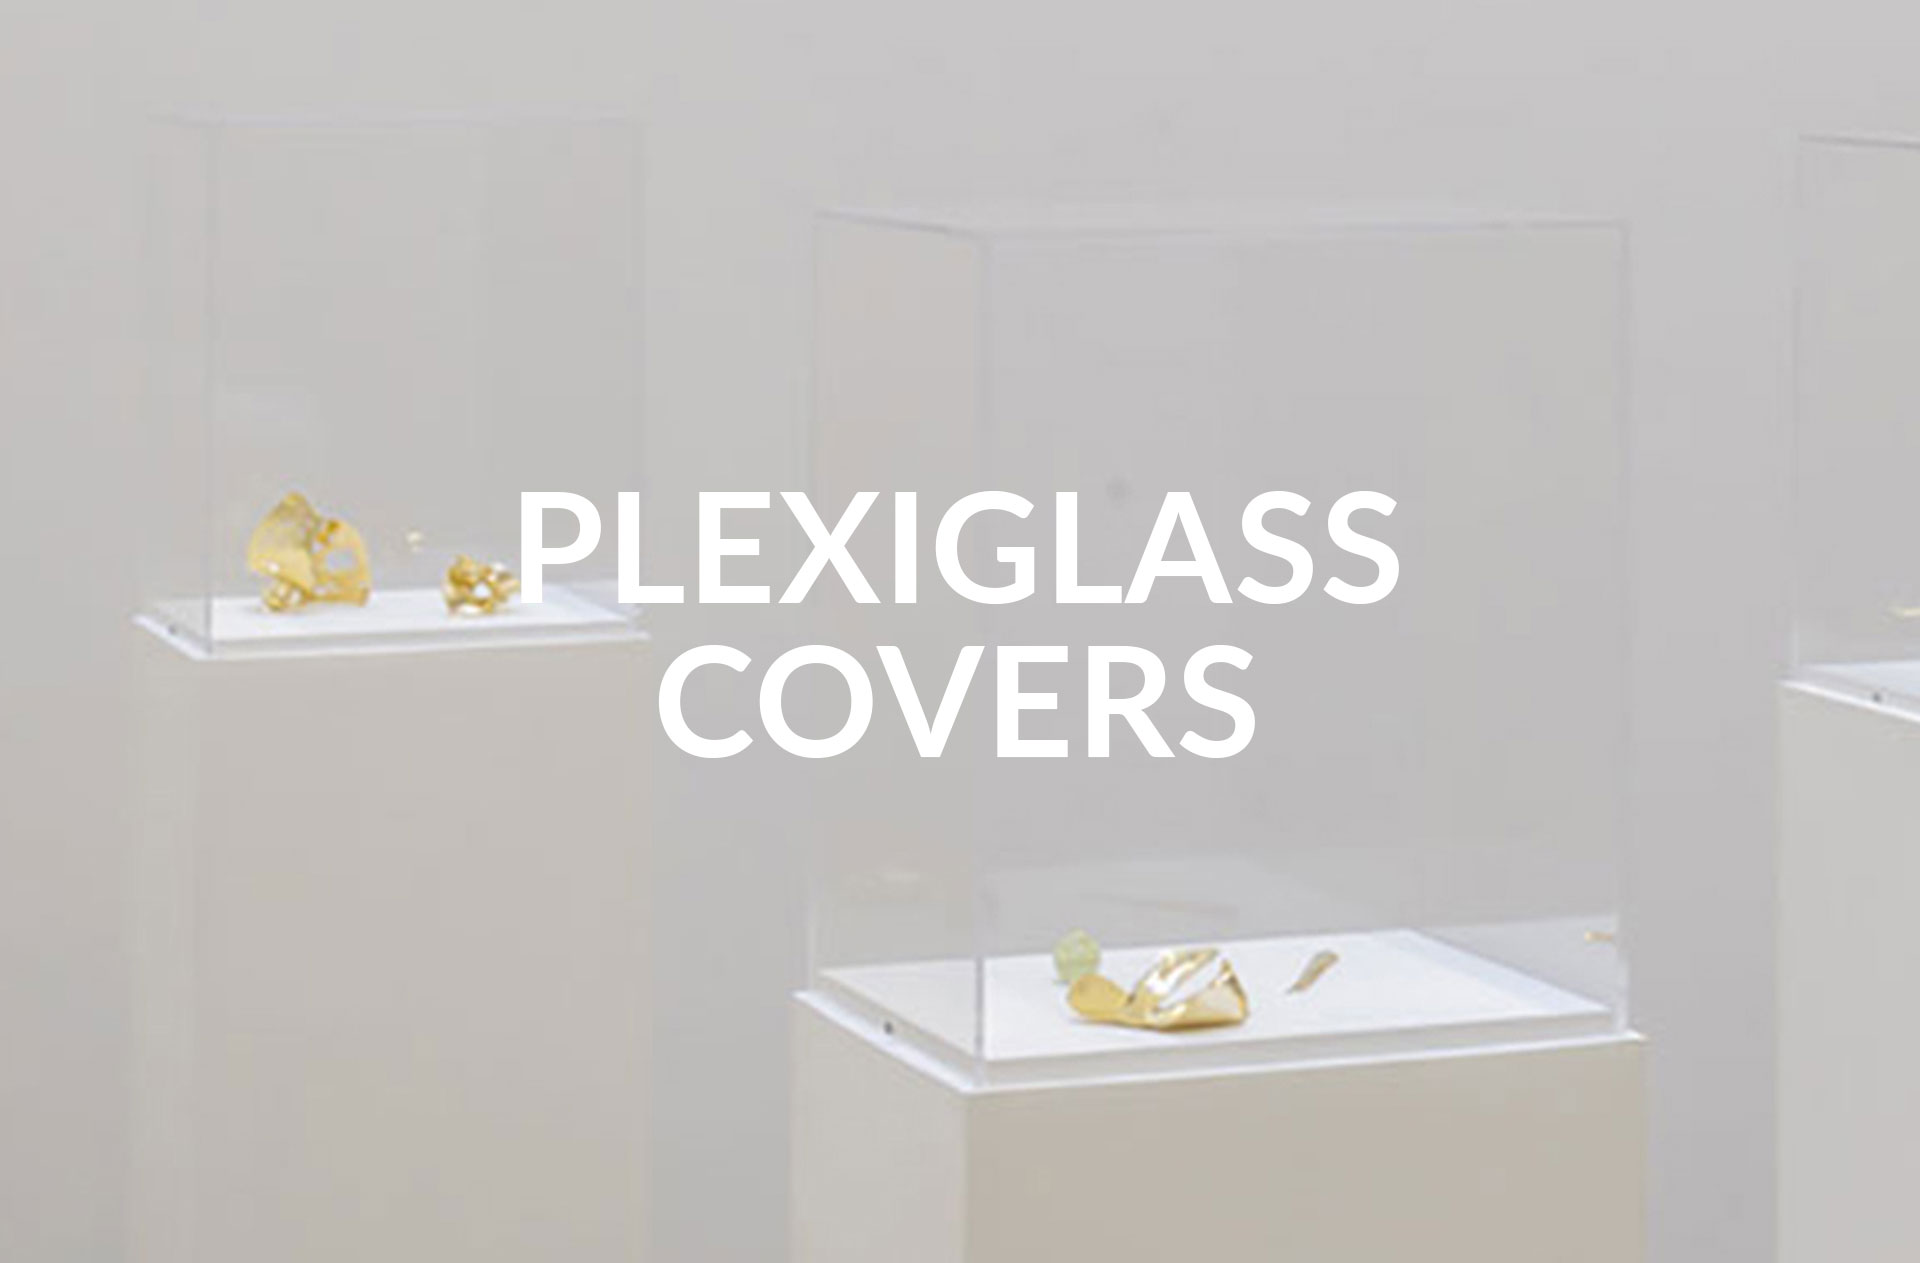 Plexiglass covers